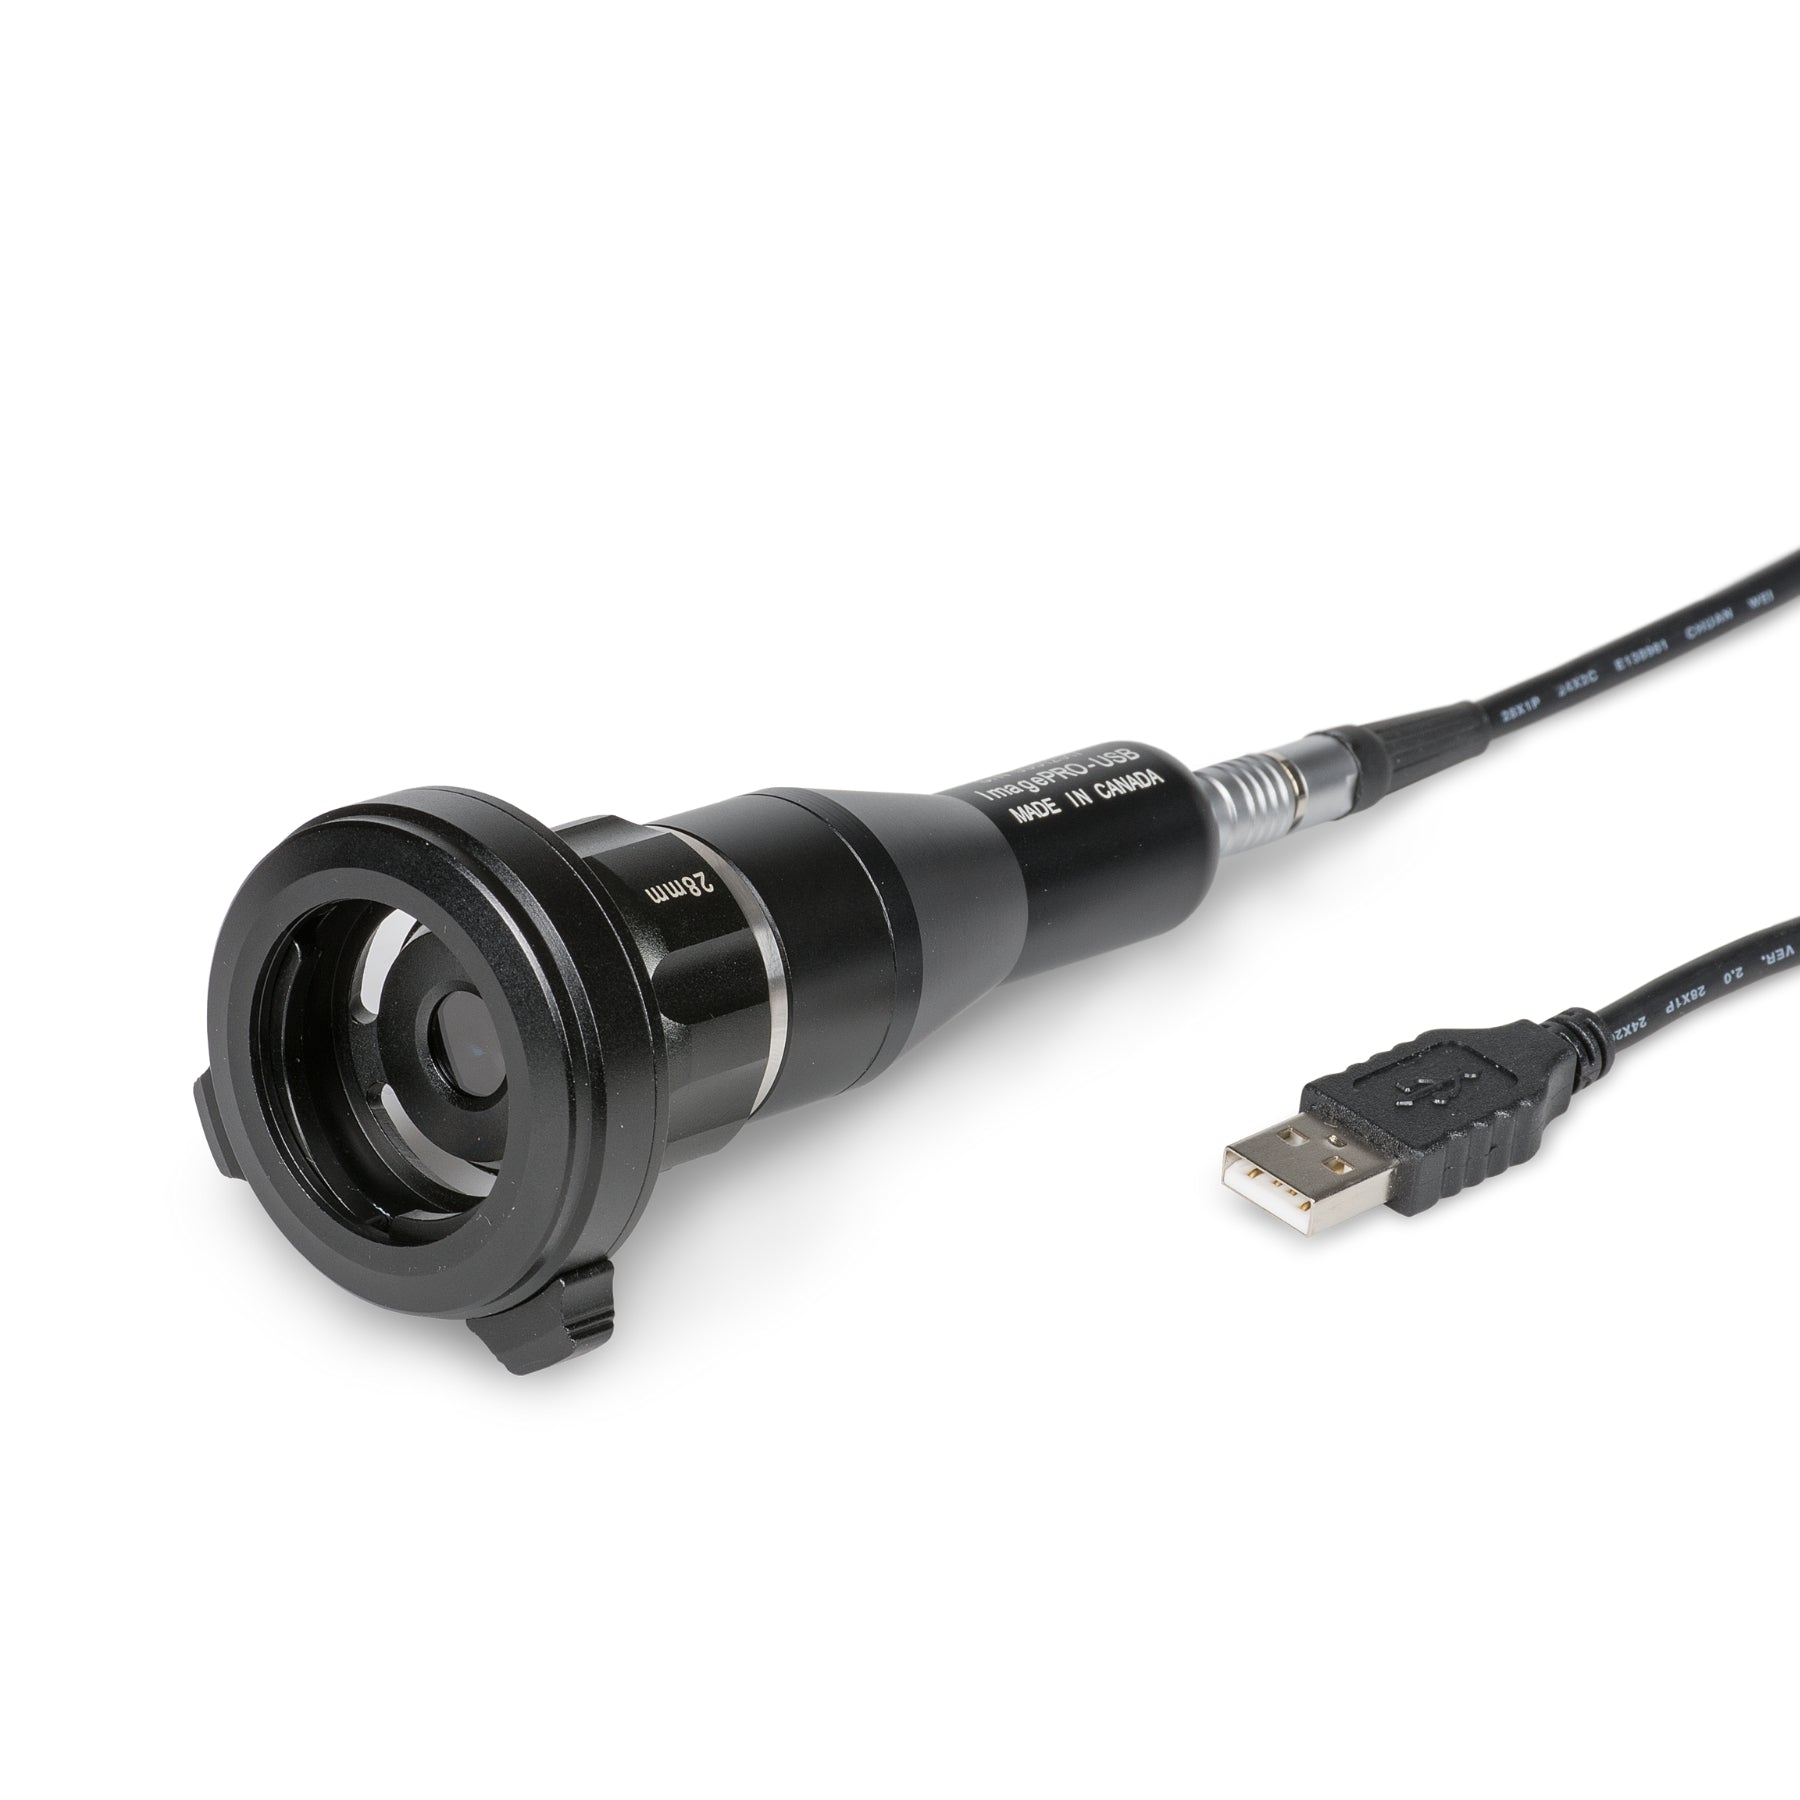 Cergrey 3-en-1 mini oreille visuelle USB HD endoscope caméra